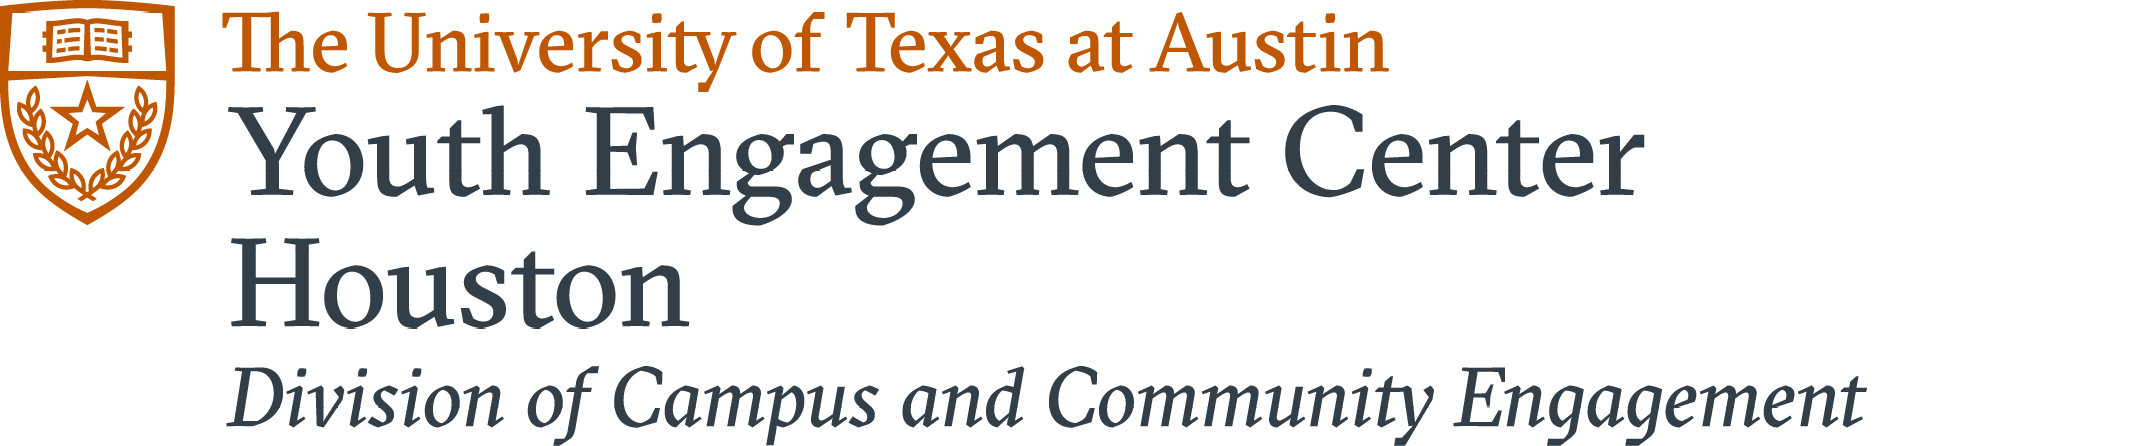 UT Youth Engagement Center - Houston